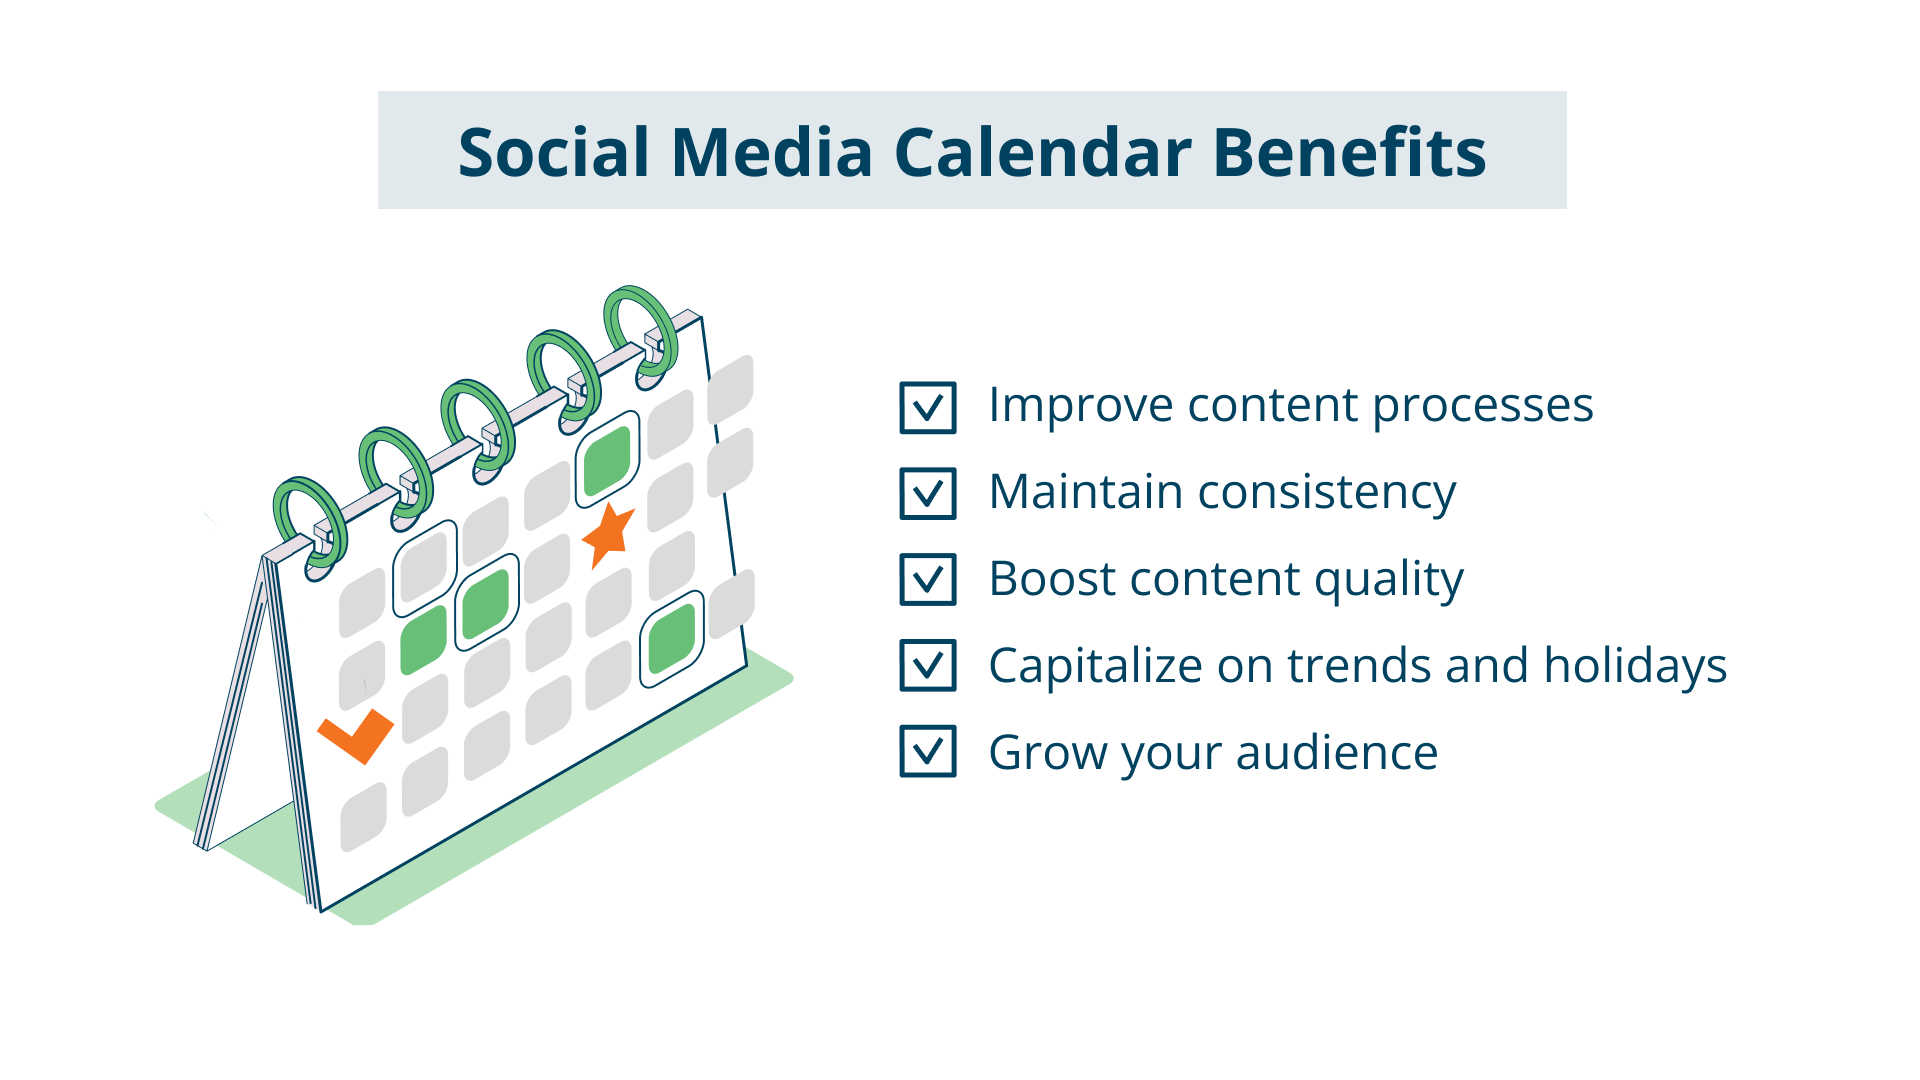 The benefits of using a social media calendar